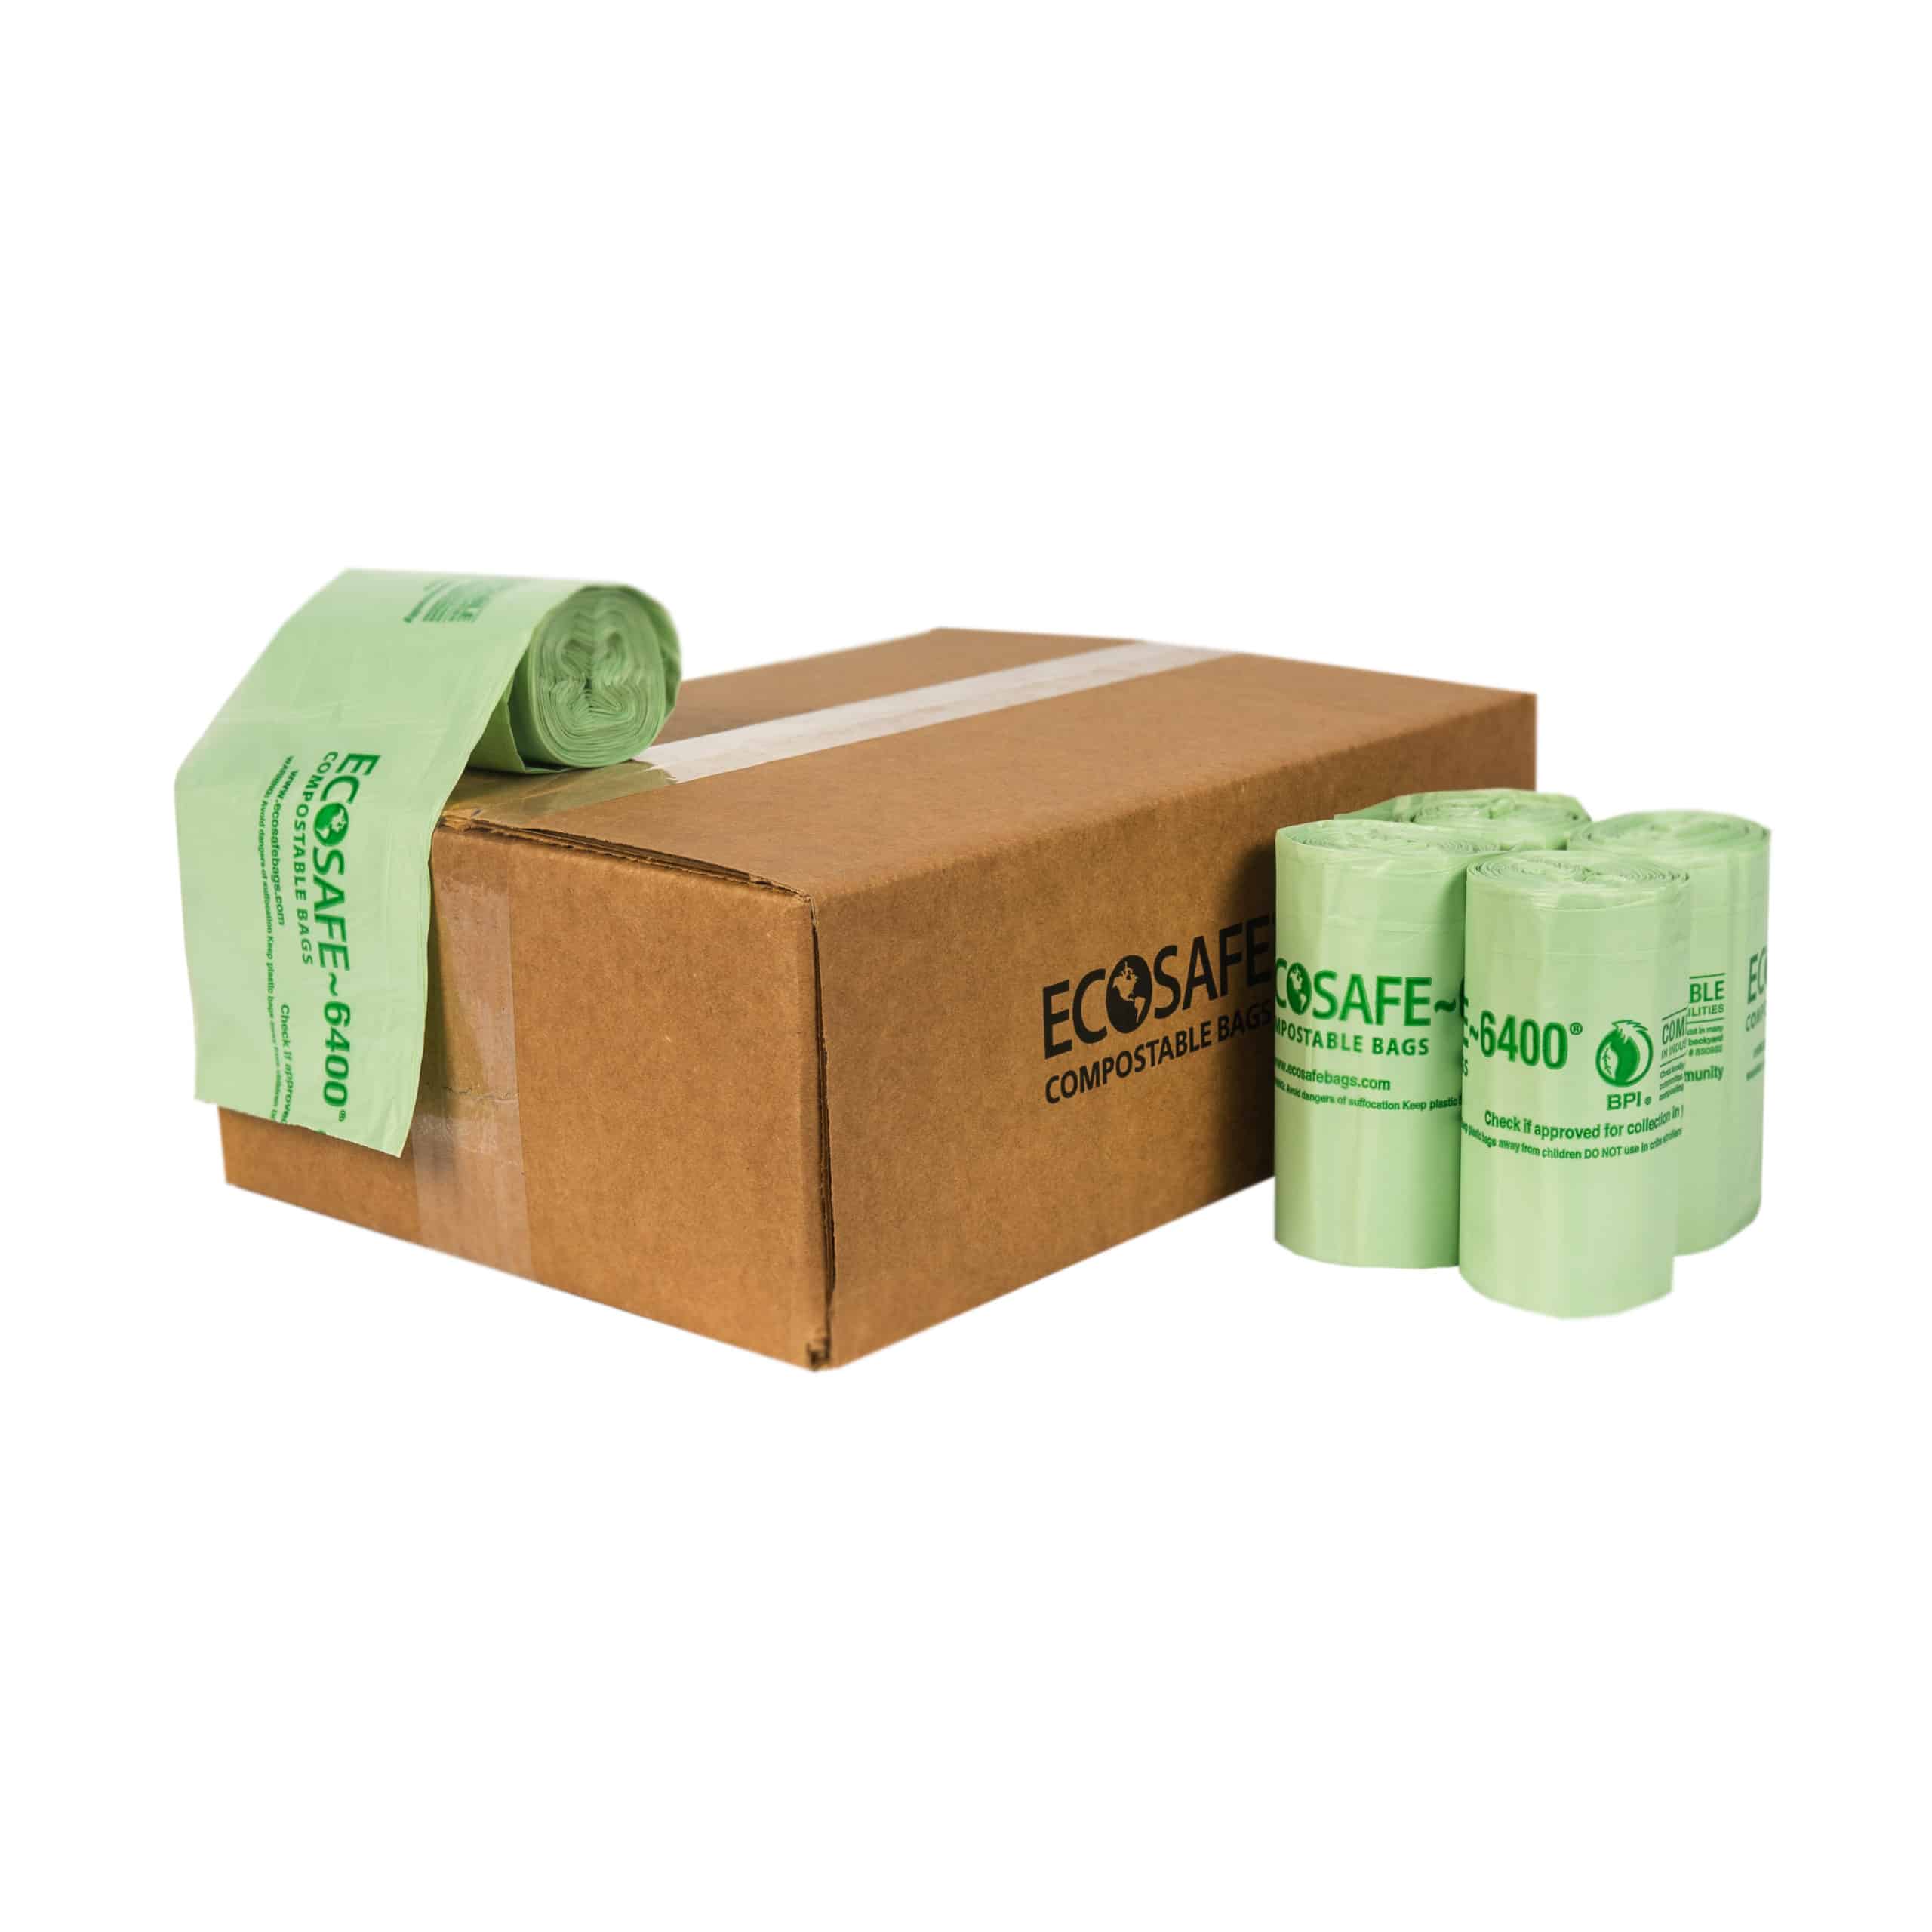 EcoSafe-Compostable-Bags-CP1825-6-case